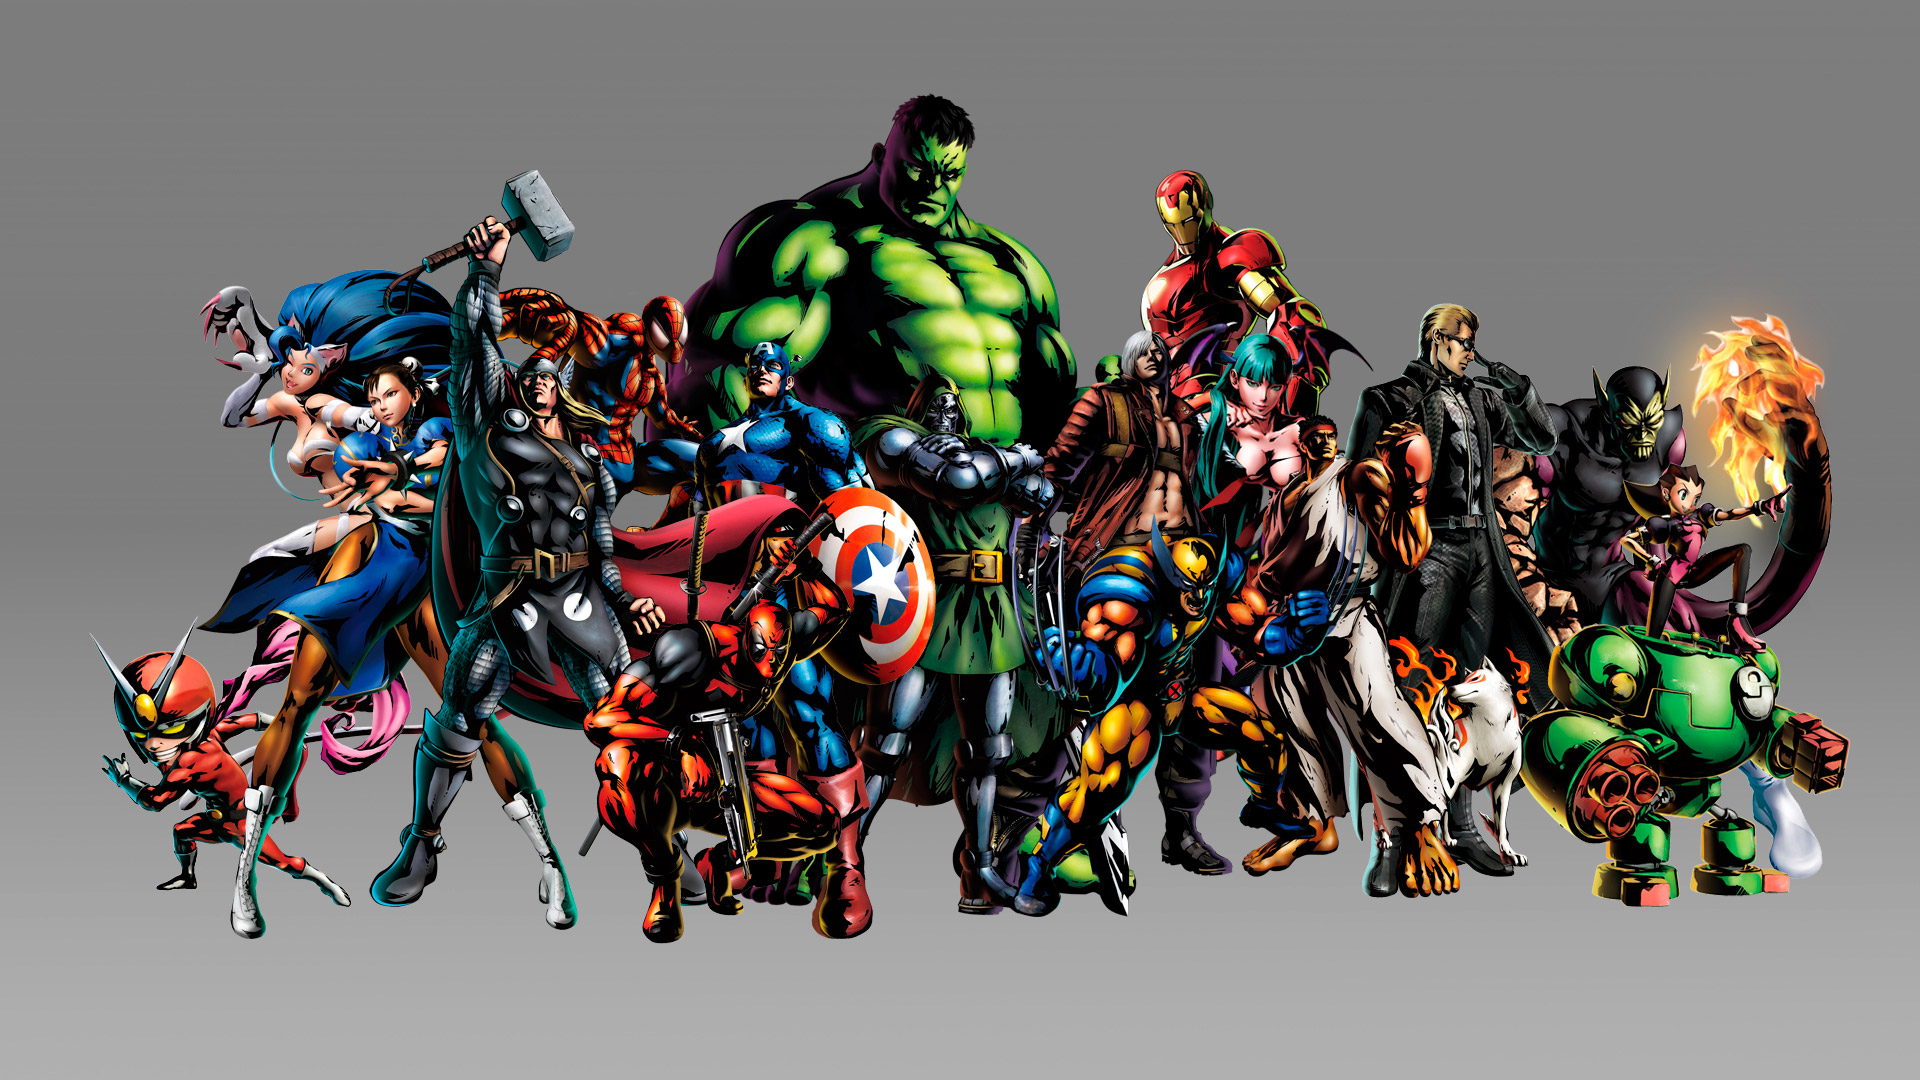 Marvel Heroes Wallpaper